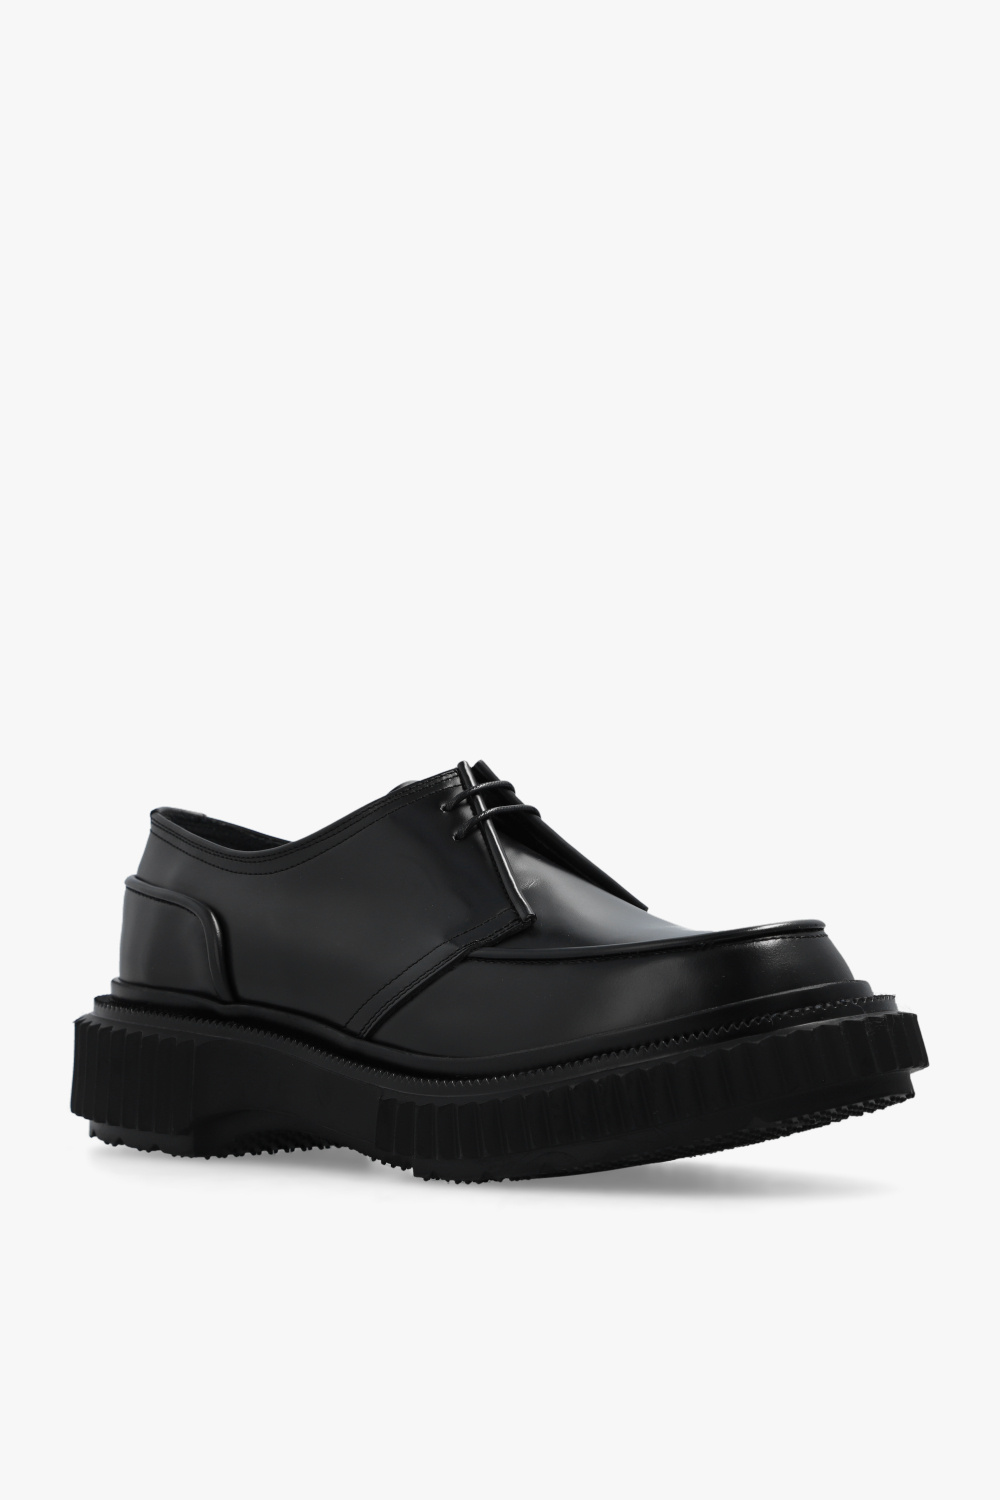 Black 'Type 181' leather shoes Adieu Paris - Shoes ROBERTO 43 2 A Zielono  Czarne Lico - SchaferandweinerShops Canada